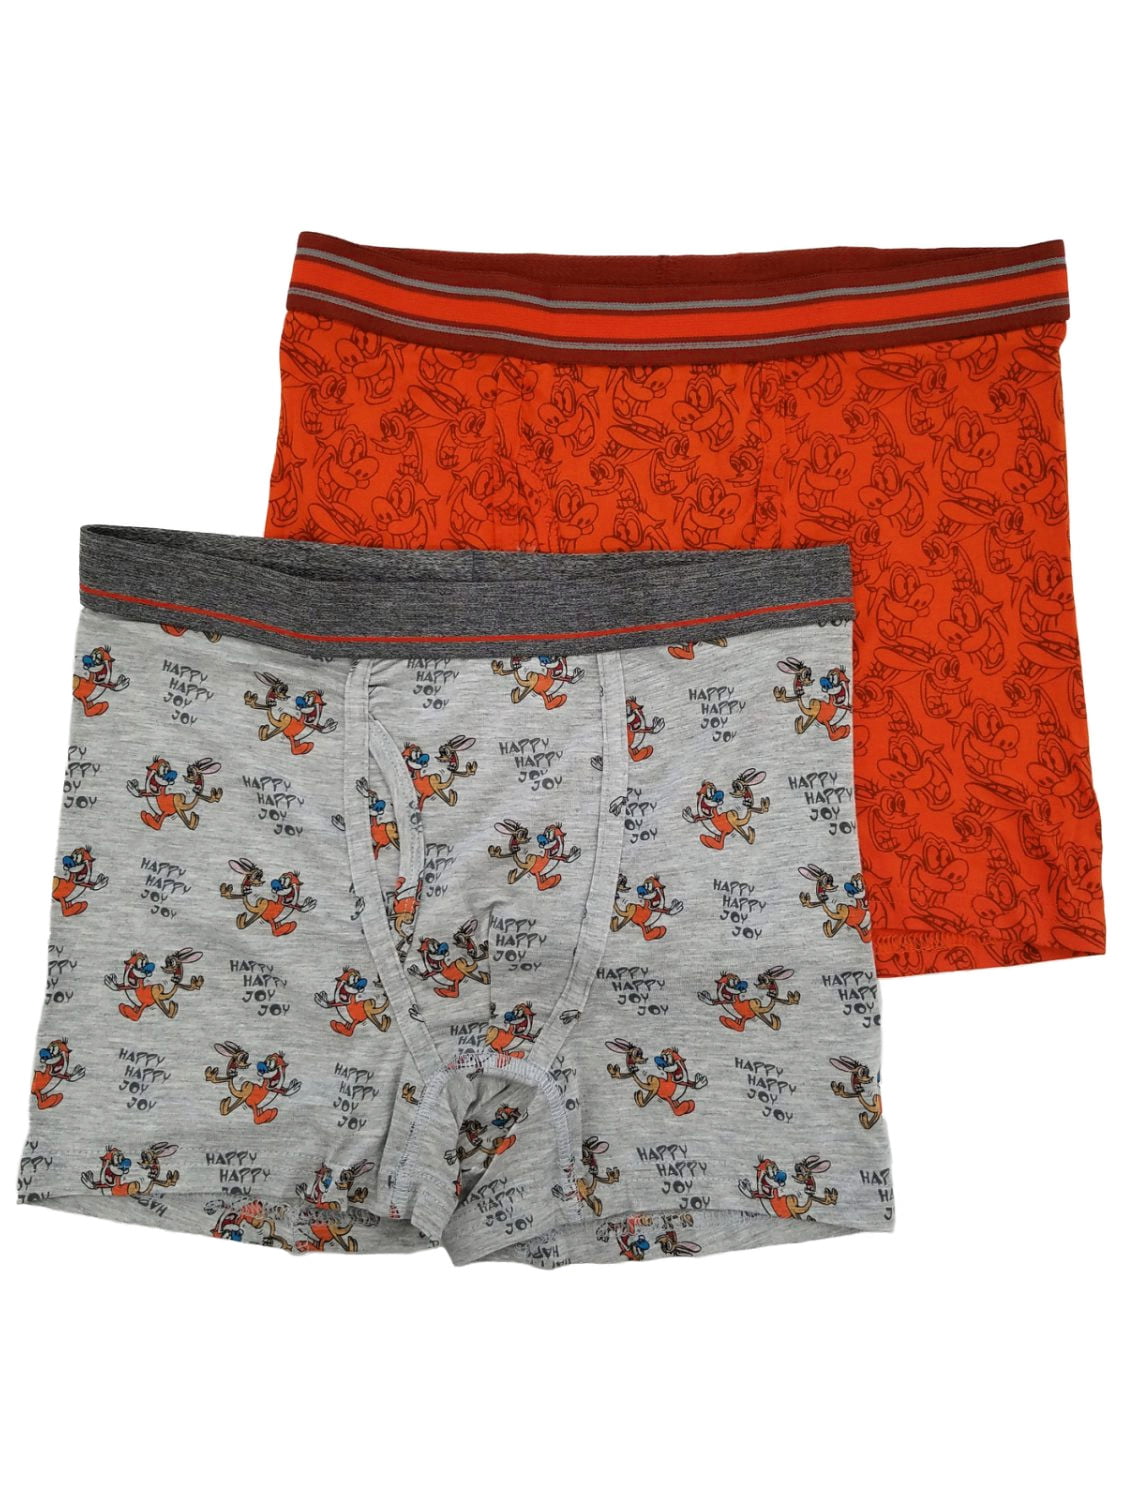 Crazy Cool Men's Seamless Boxer Briefs Underwear 6-Pack Set (Dots